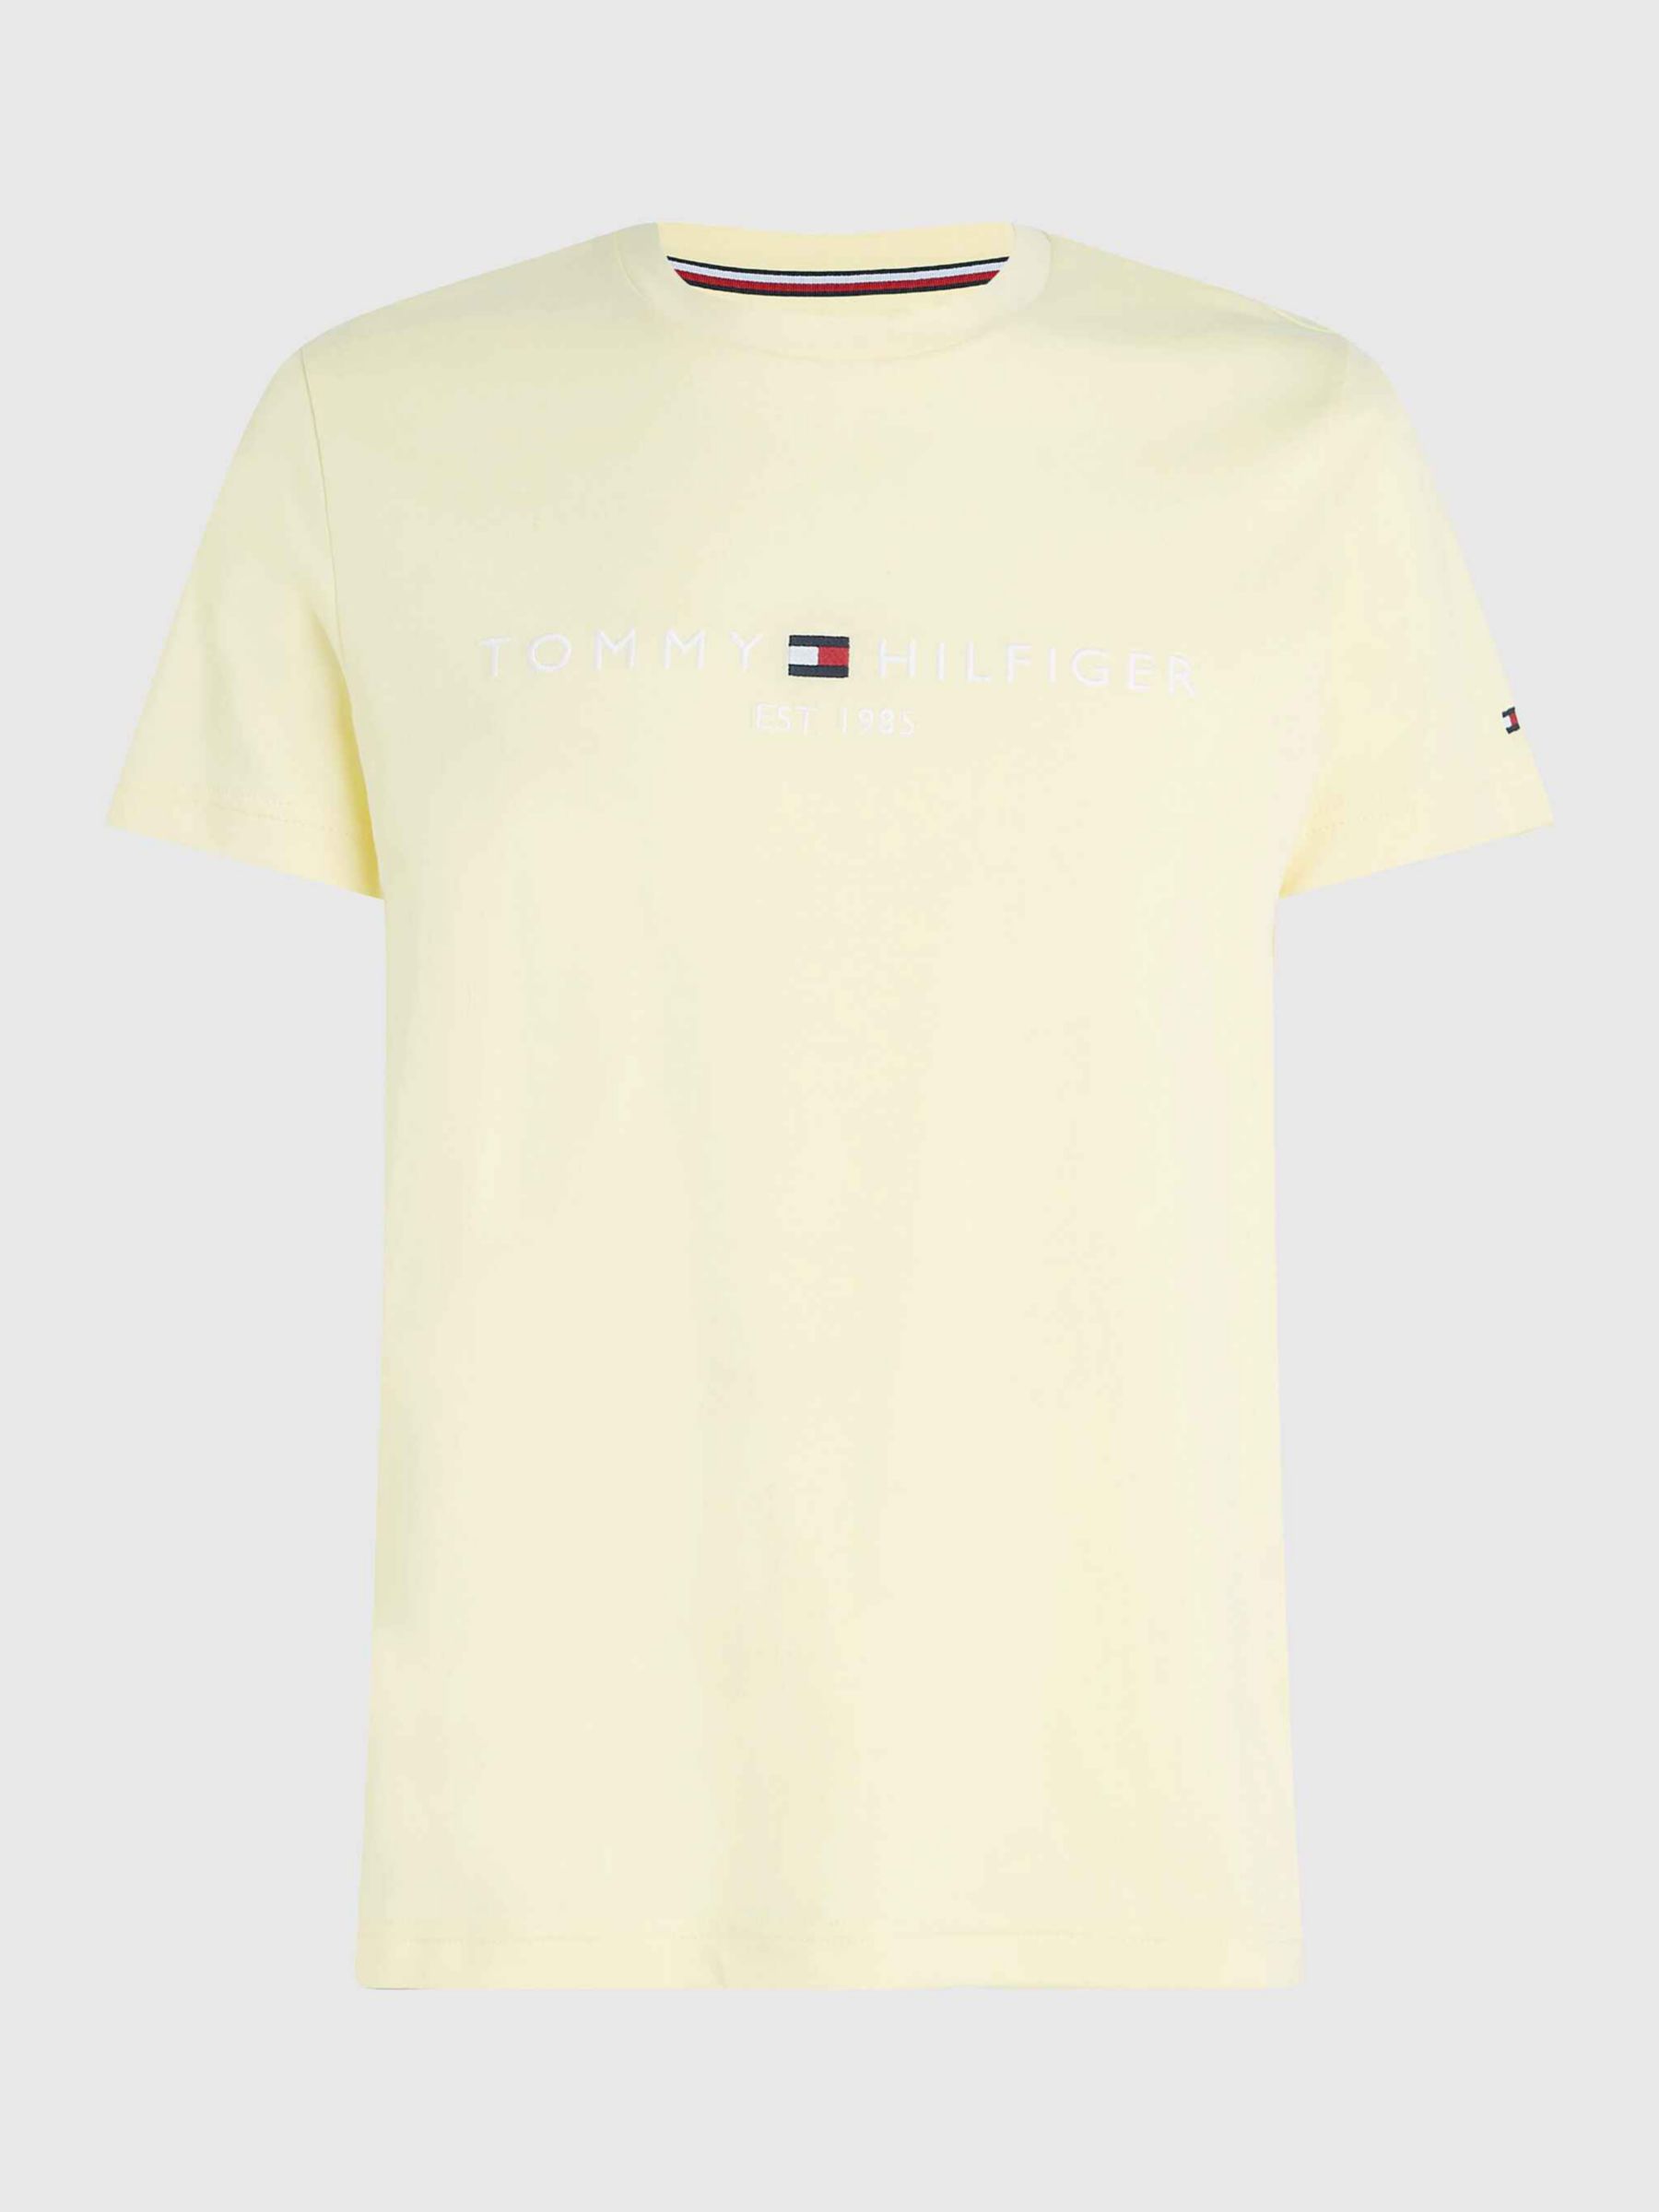 Tommy Hilfiger Flag Logo Crew Neck T-Shirt, Yellow Mist, L